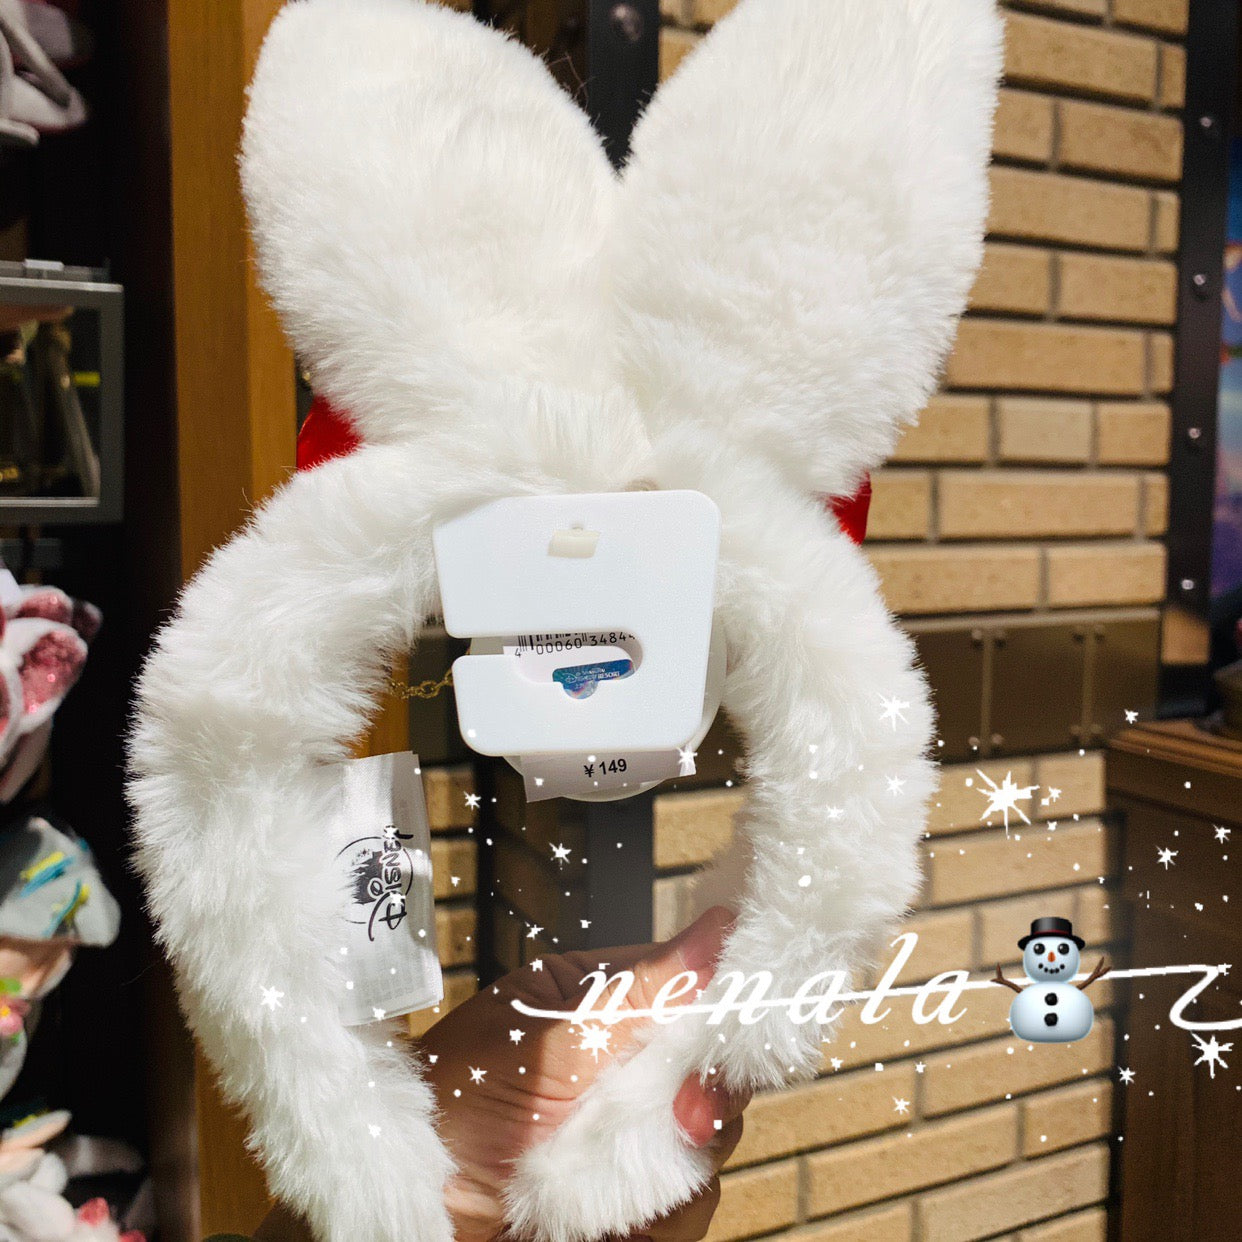 White Rabbit Disney nuiMOs Plush, Alice in Wonderland